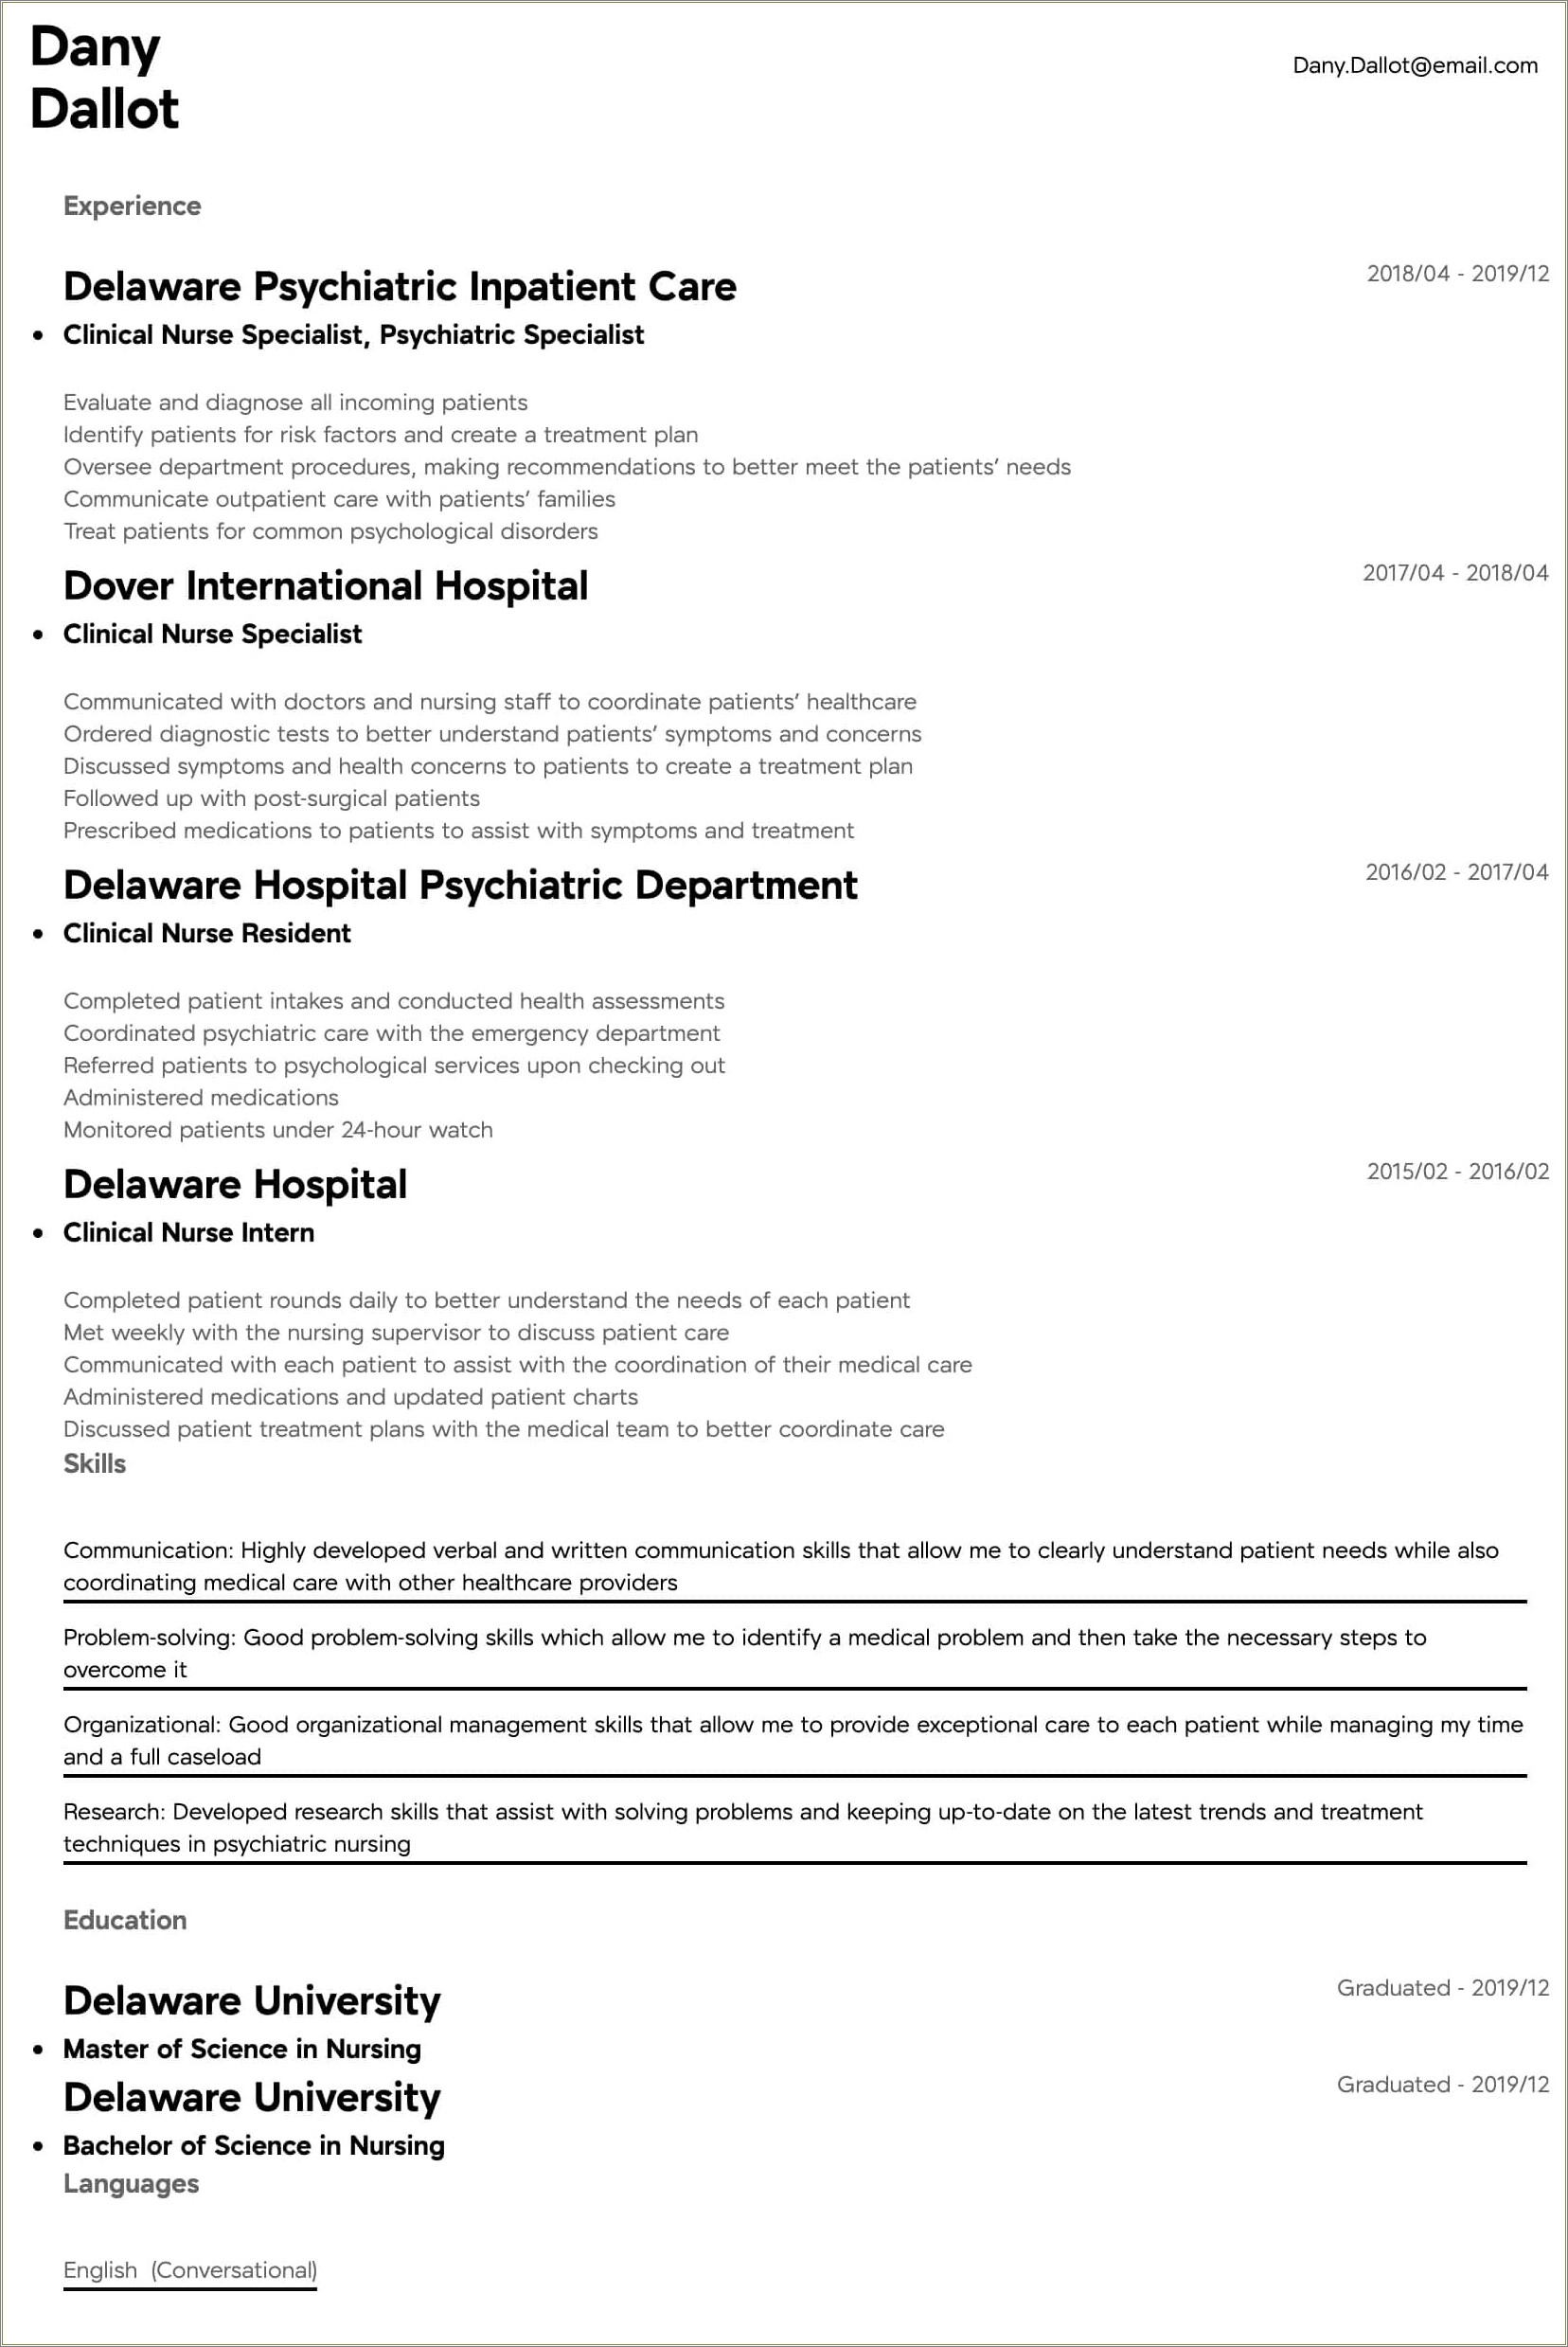 Experienced Registered Nurse Resume Template 2019